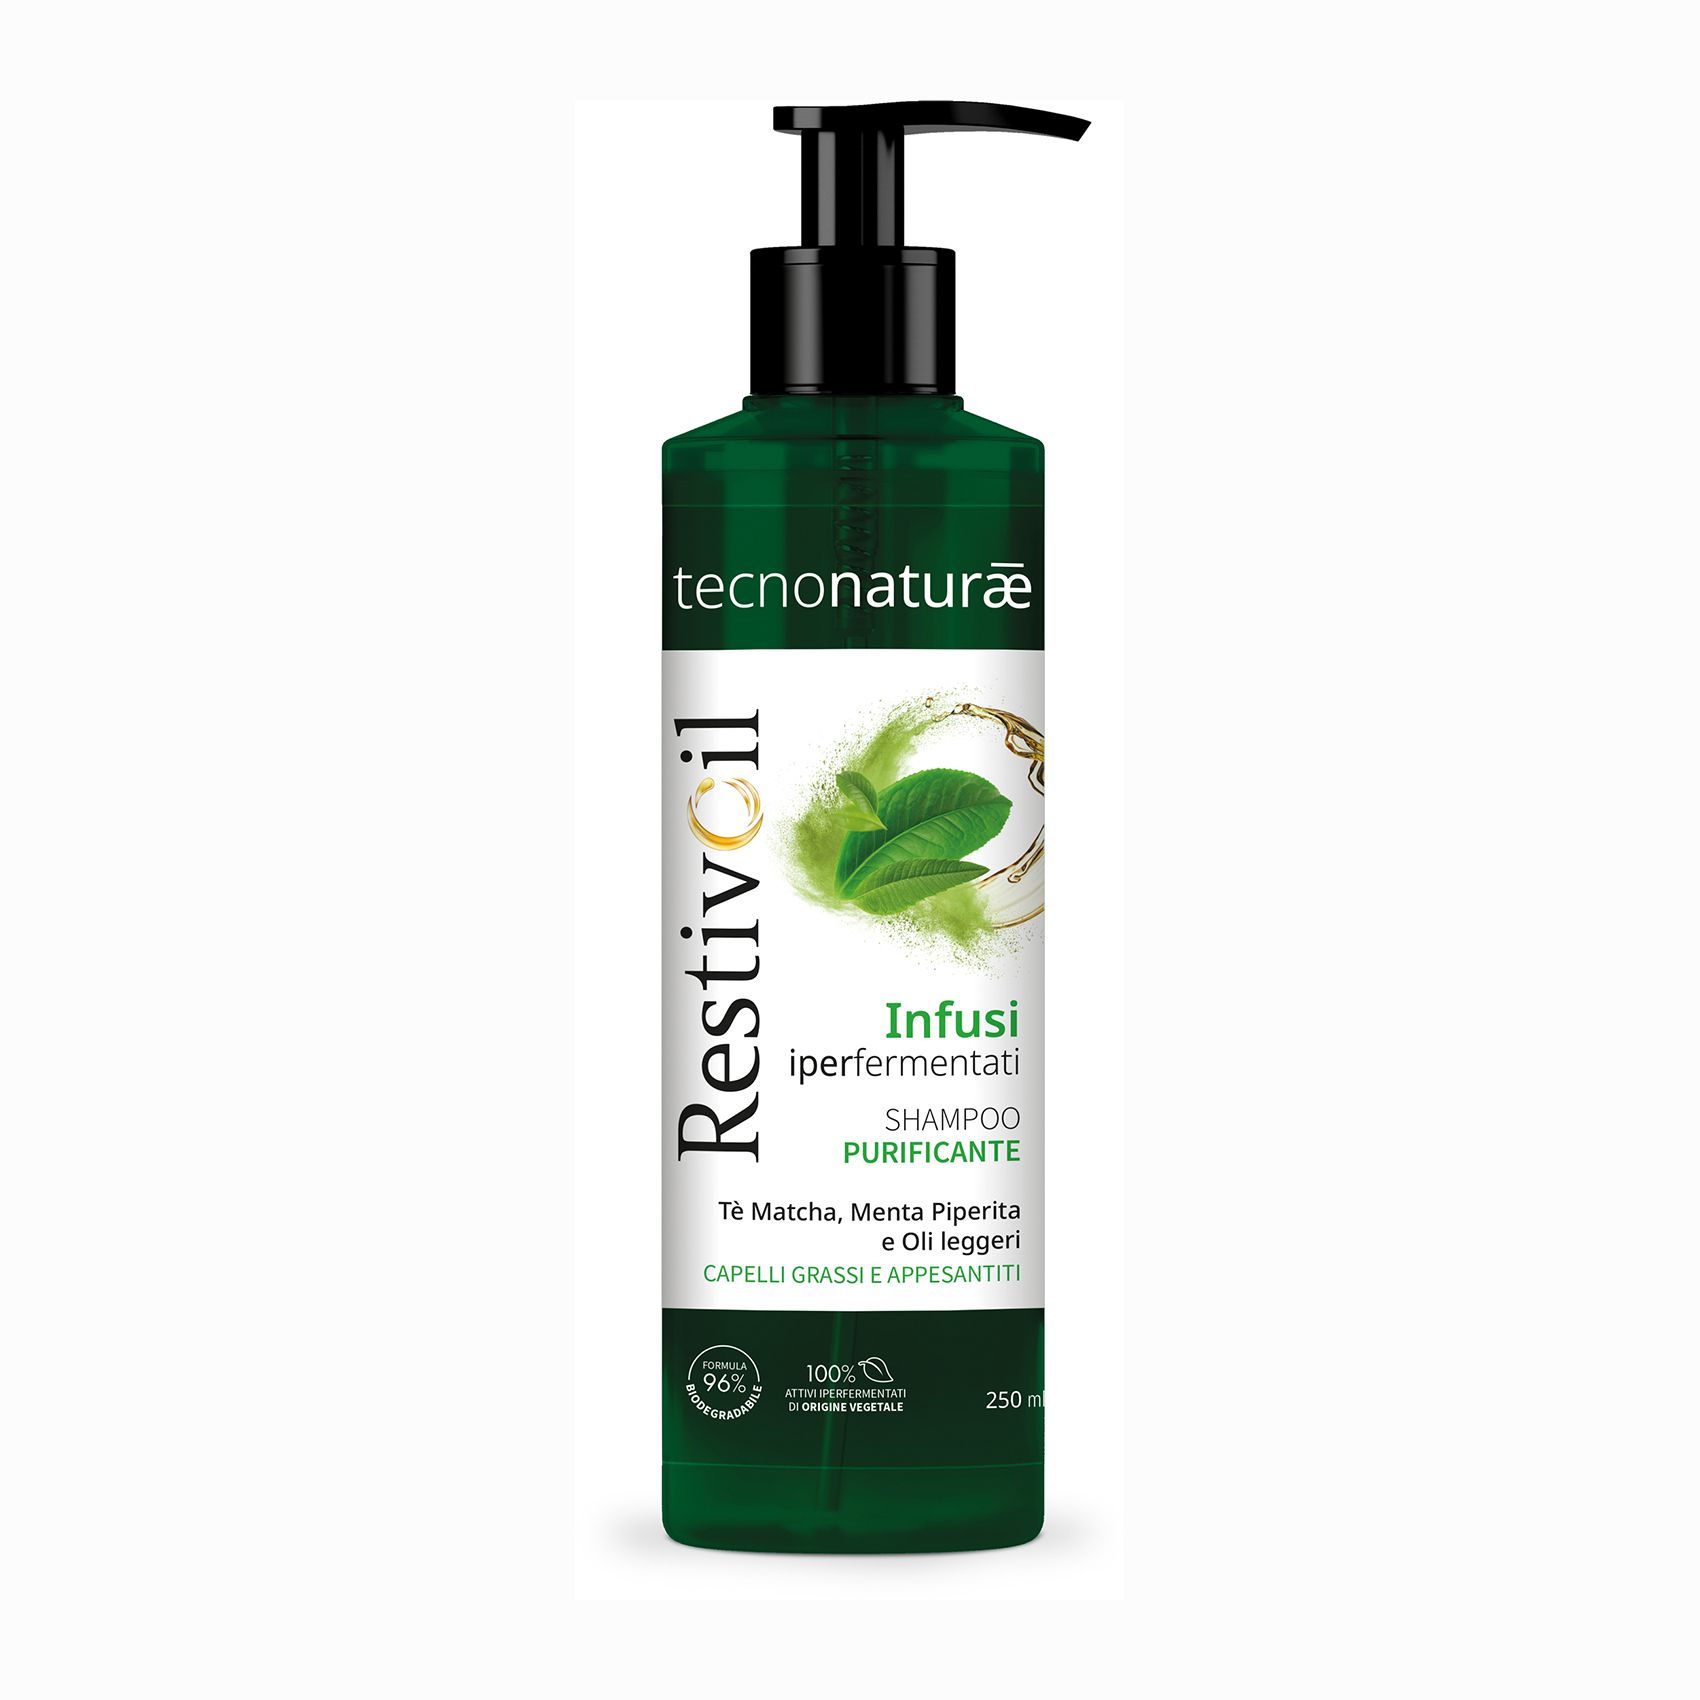 Restivoil Tecnonaturae Shampoo Purificante Infusi Iperfermentati